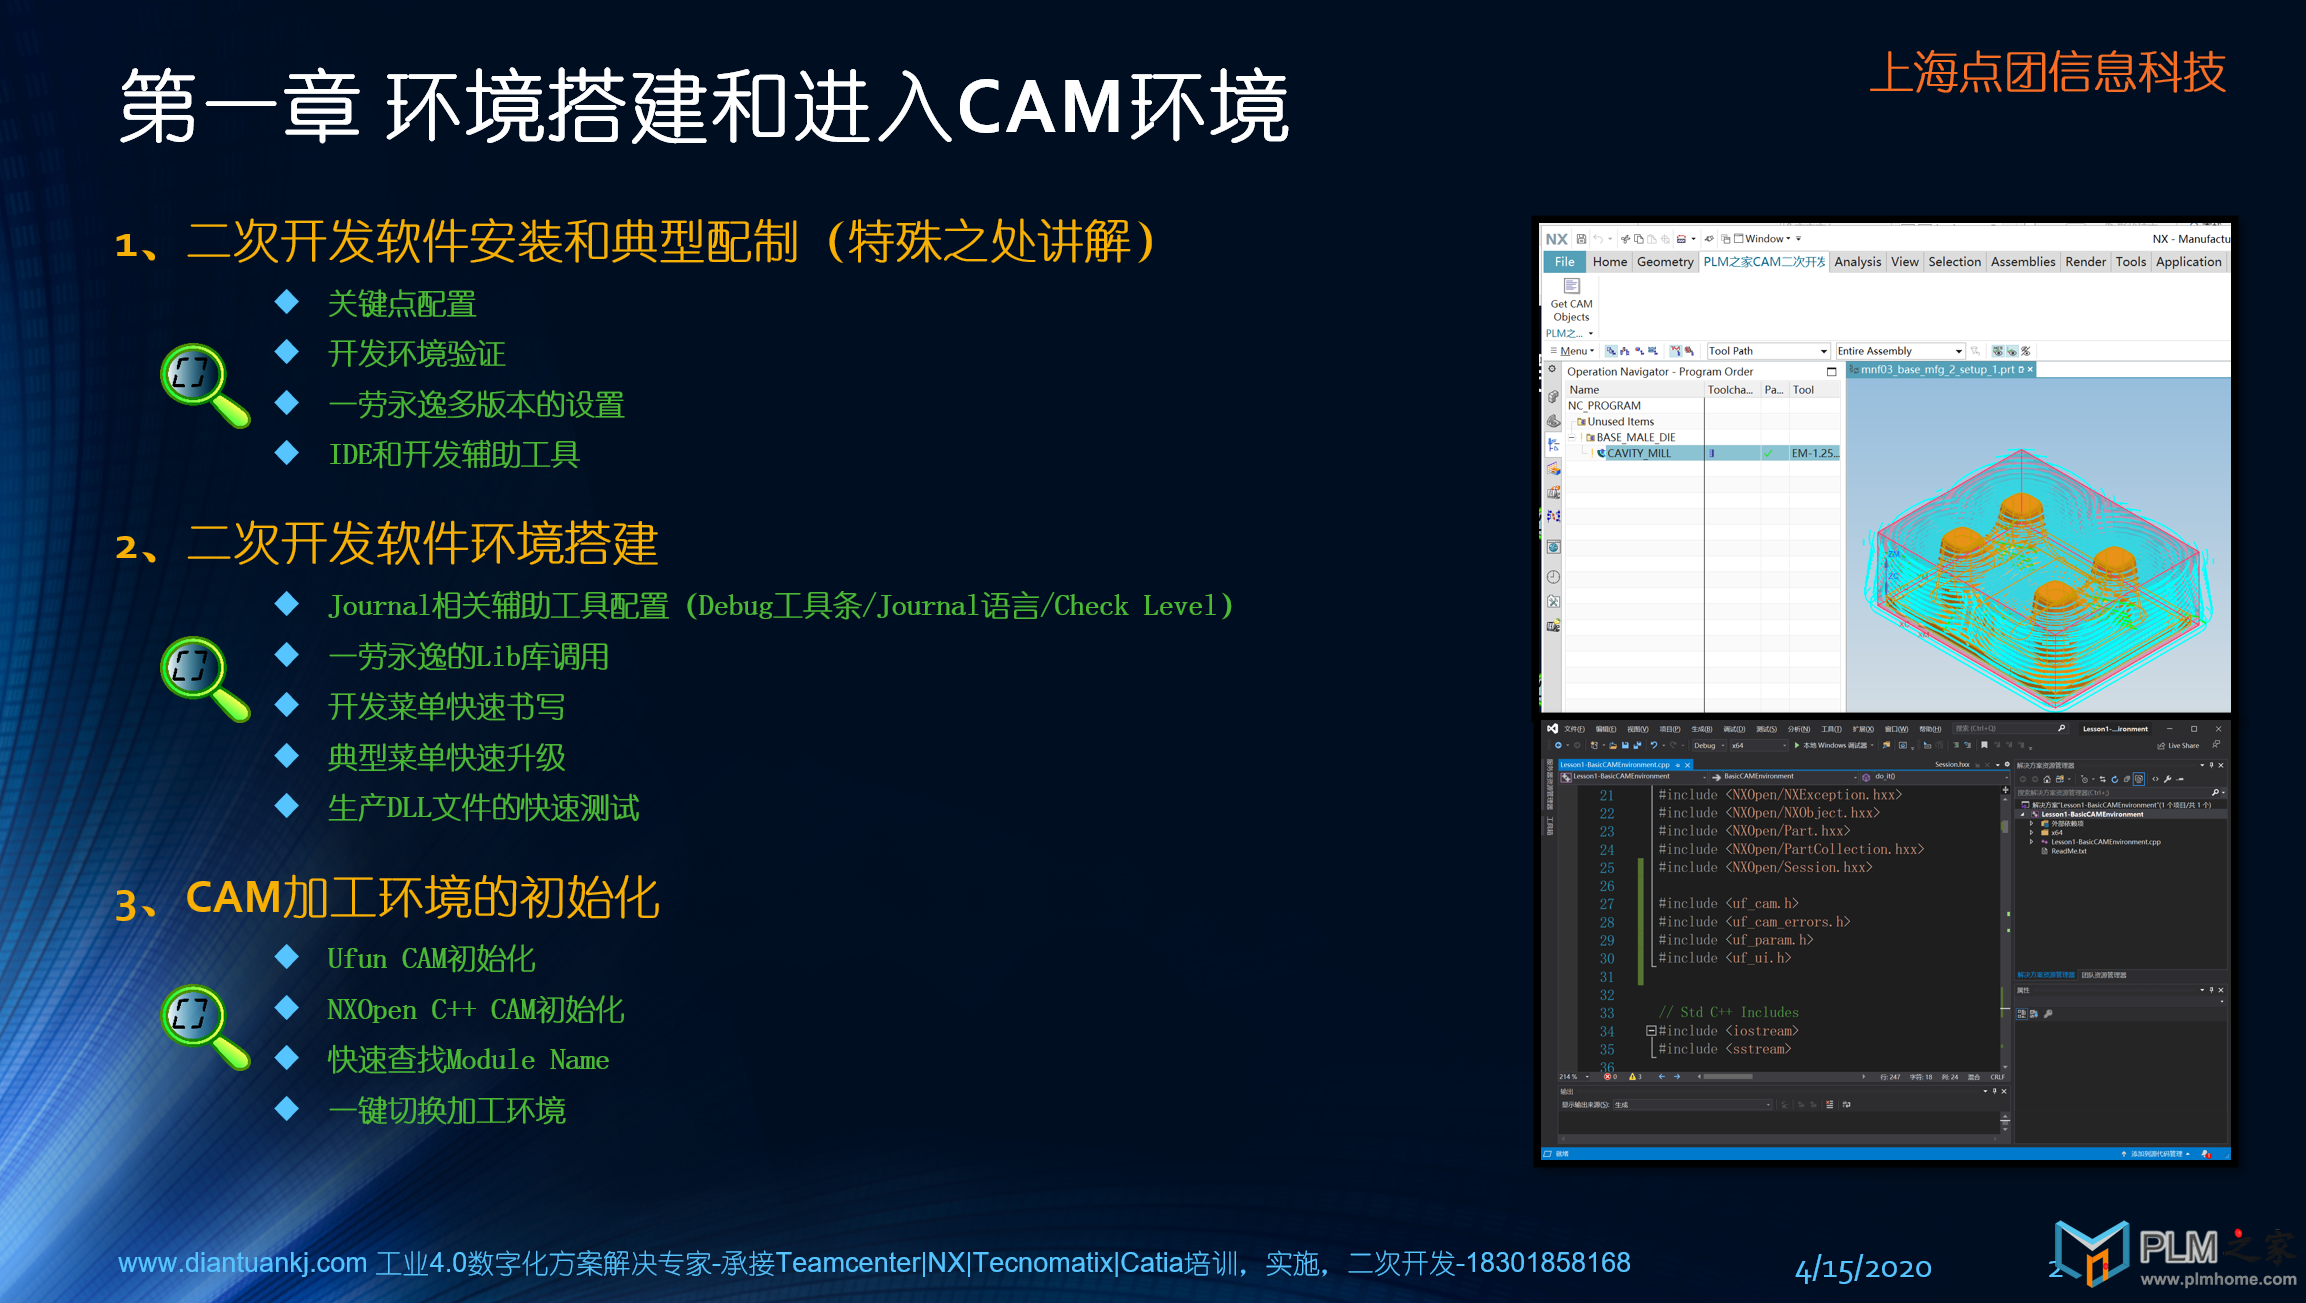 PLM之家NX CAM二次开发-1 环境搭建和进入CAM环境.png